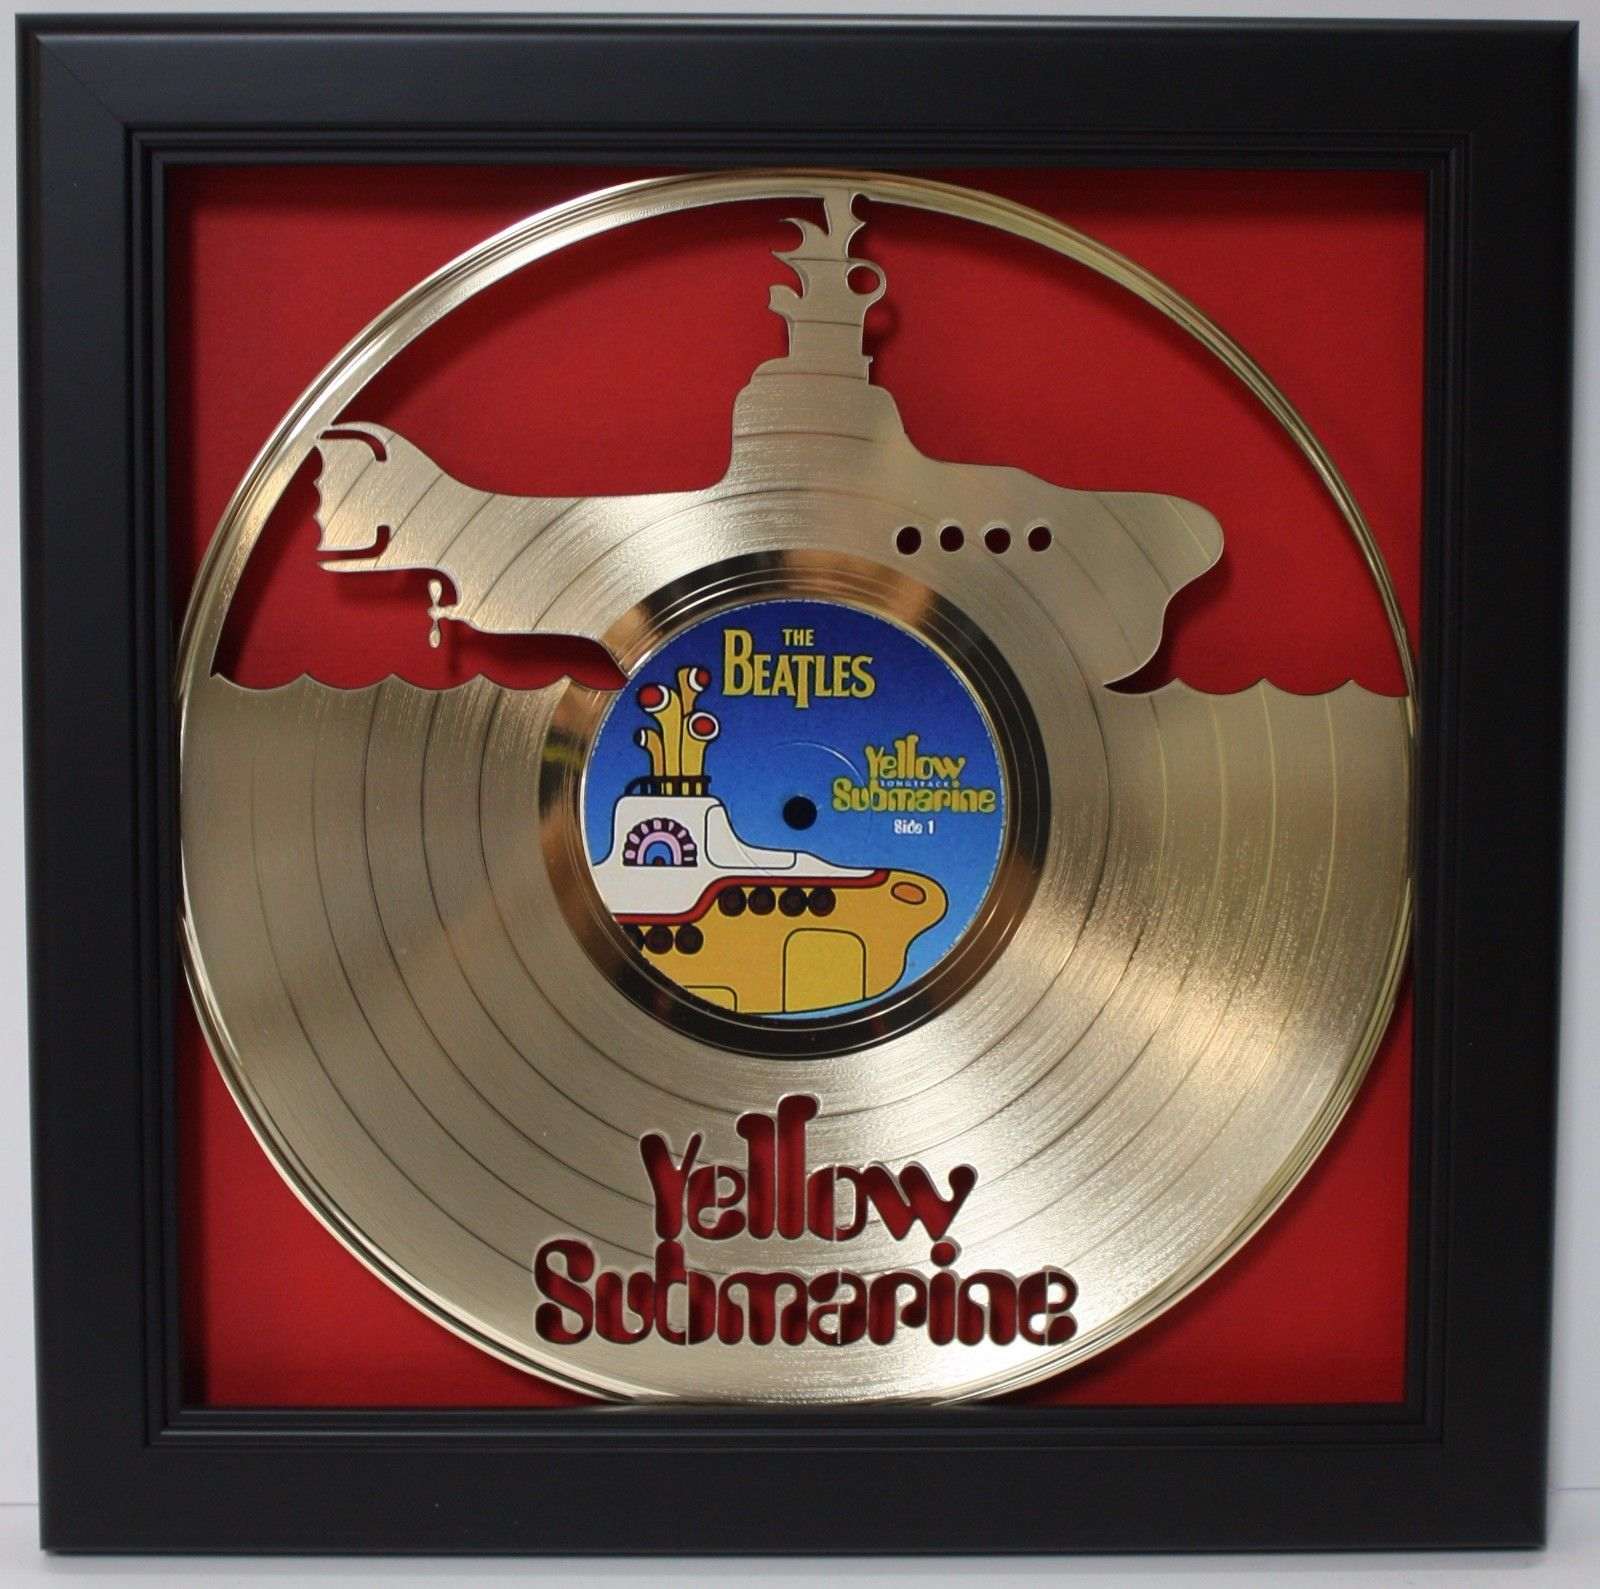 The Beatles Yellow Submarine très beau Vinyle LOVE SONGS record hier decor 